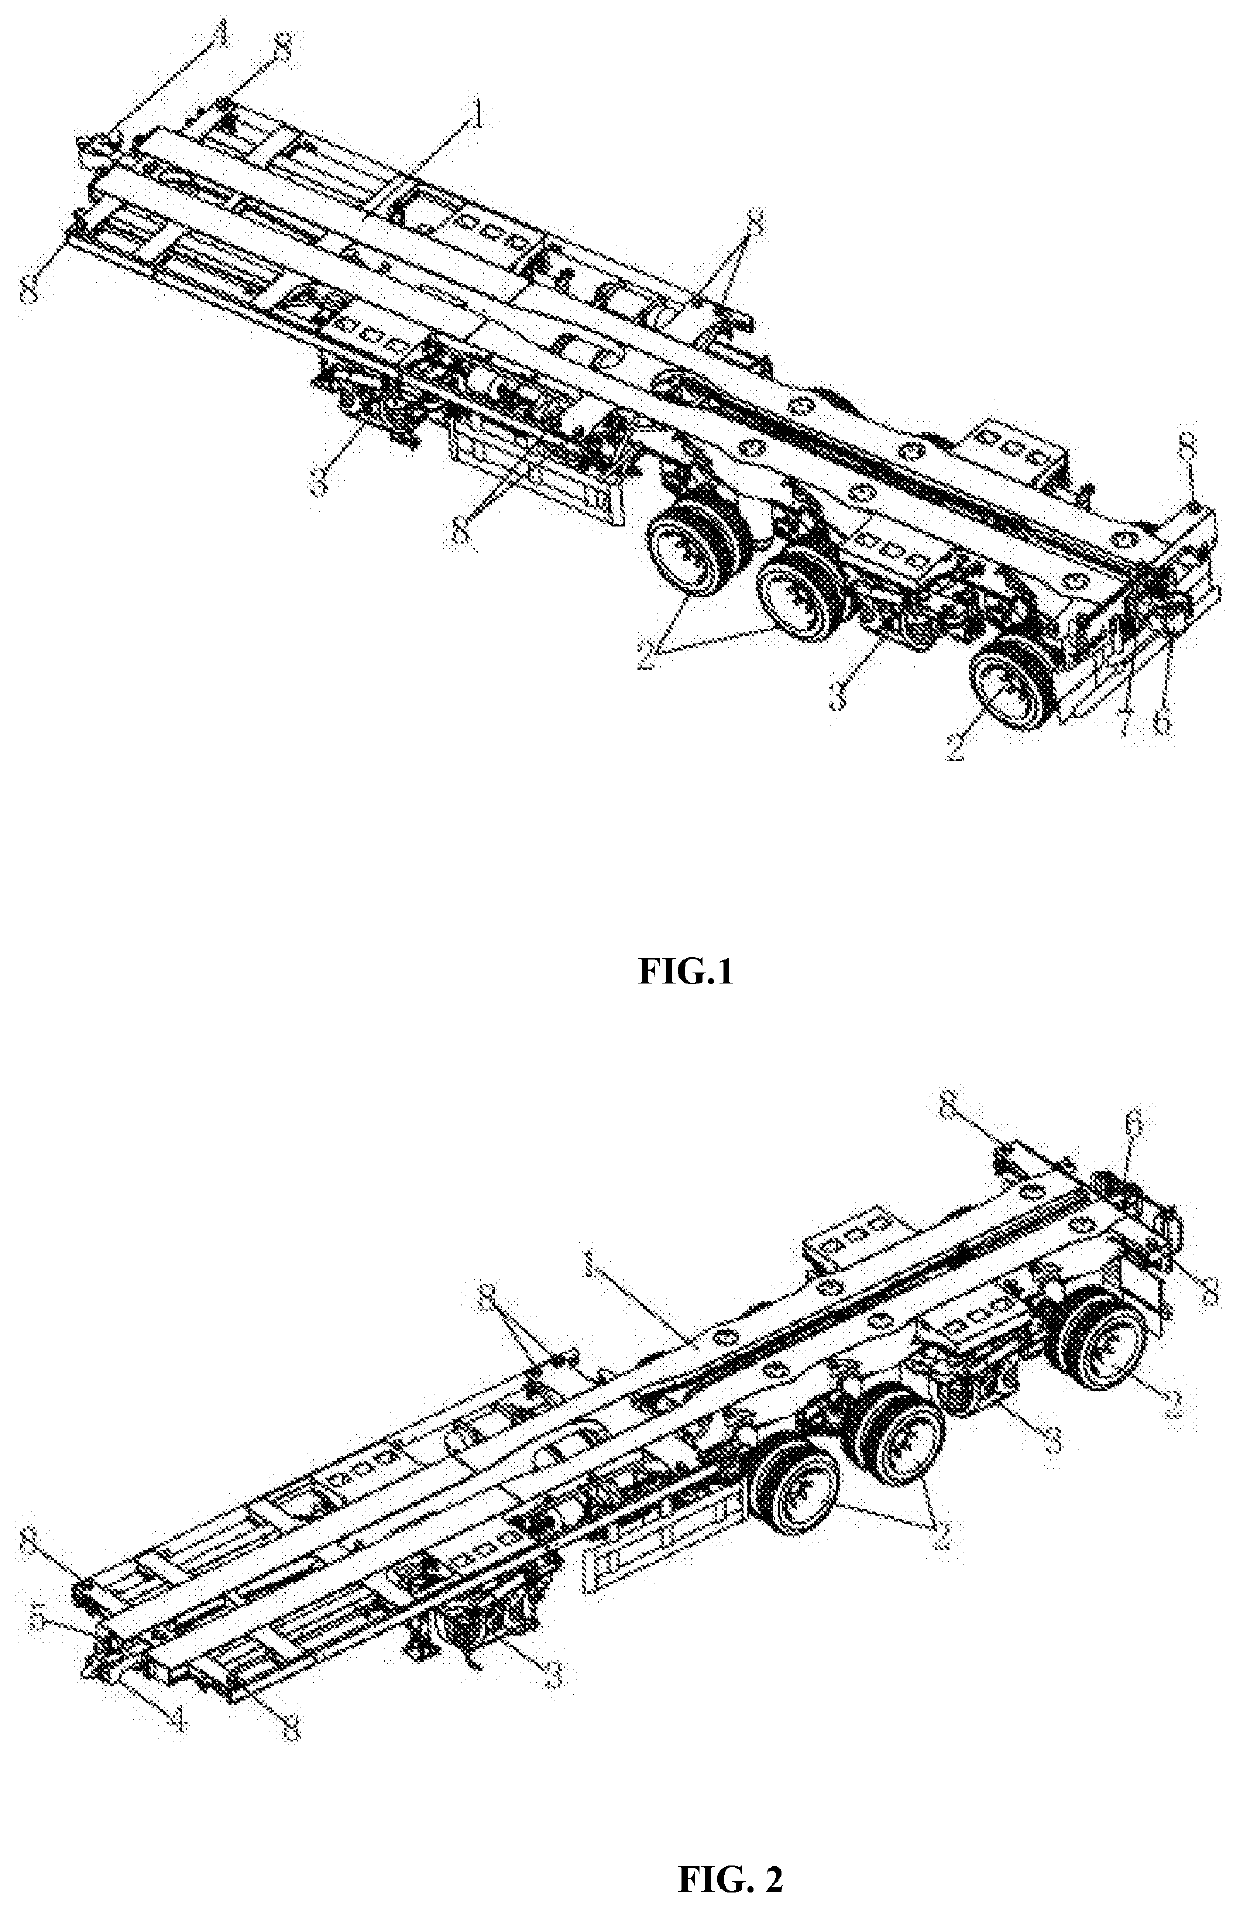 Road-rail dual-purpose vehicle